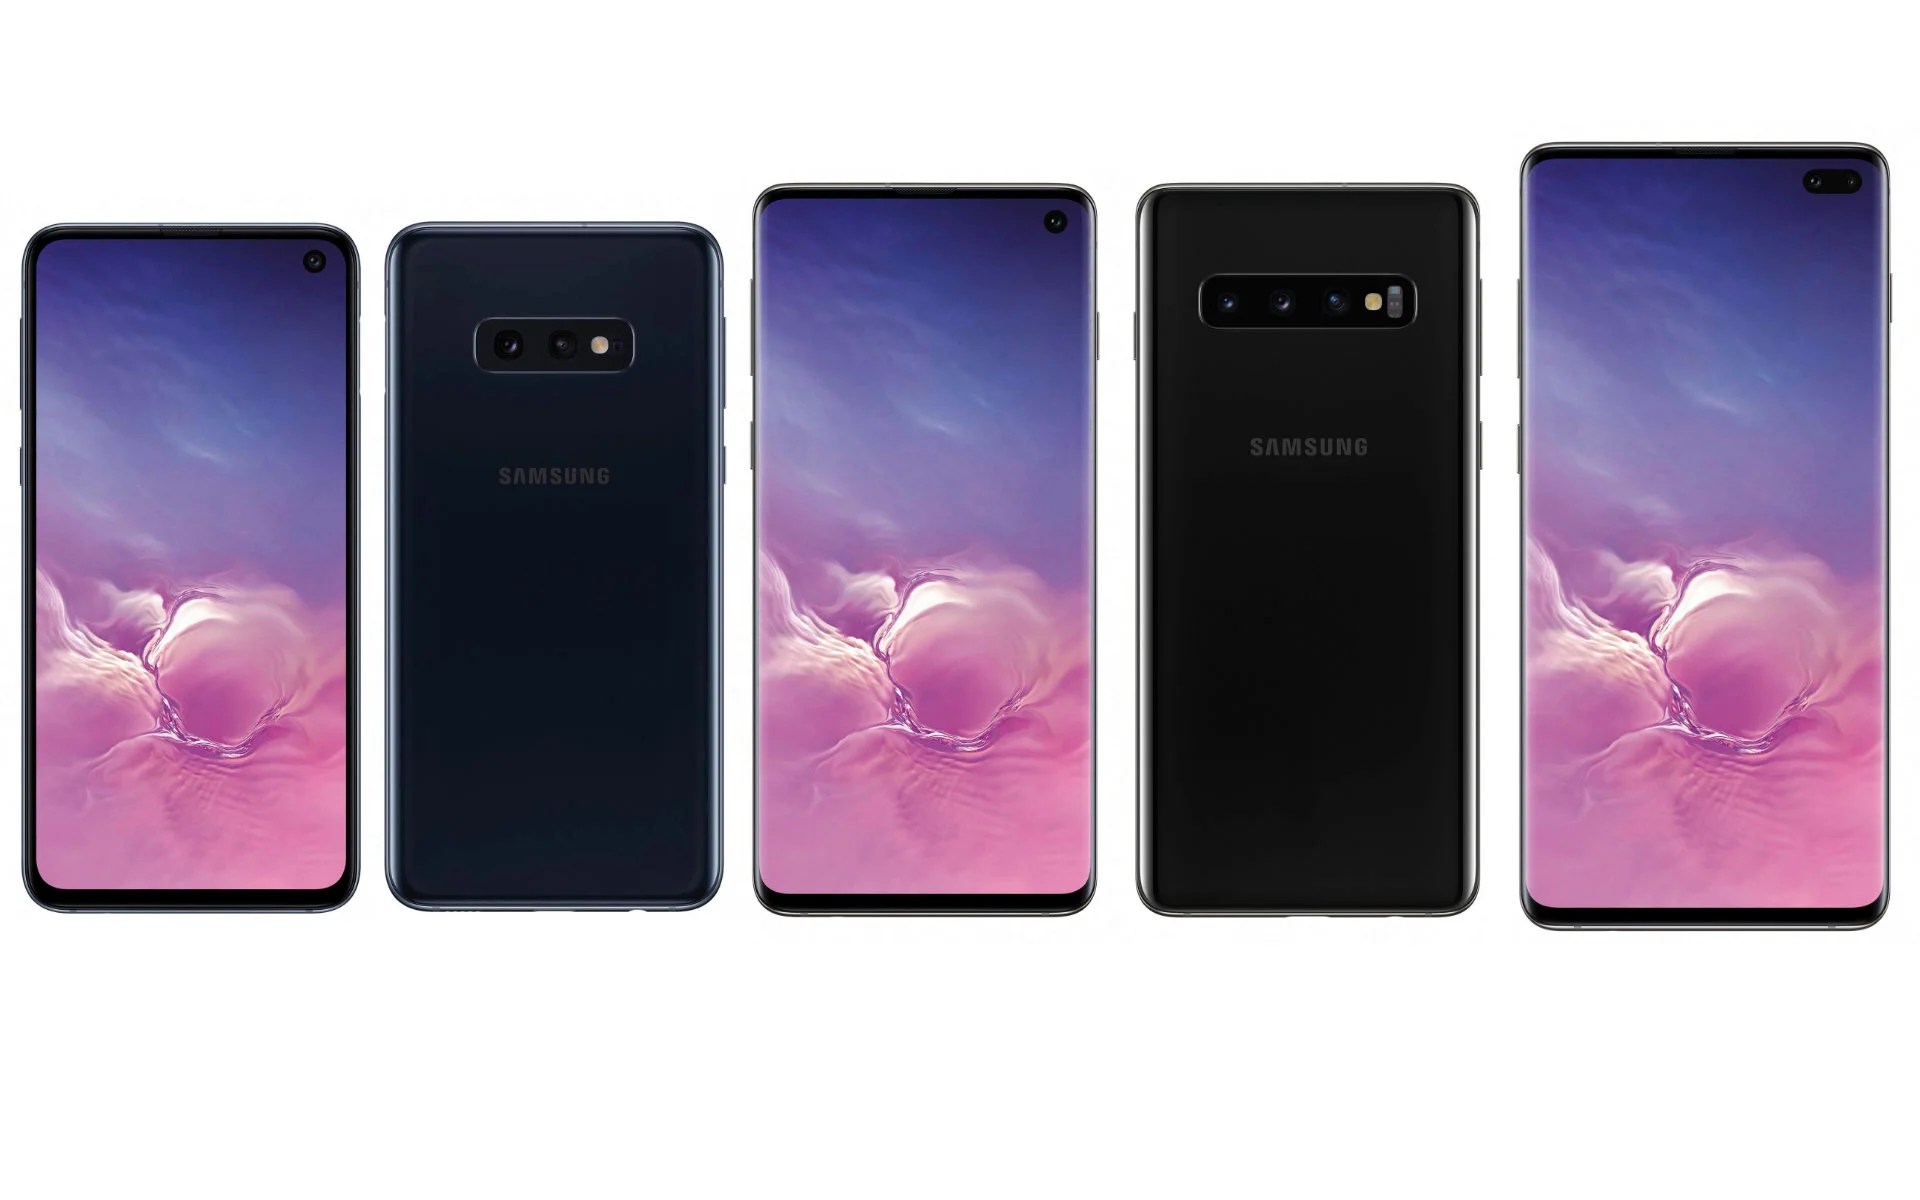 Samsung Galaxy S10 E S10 S10 Plus evleaks